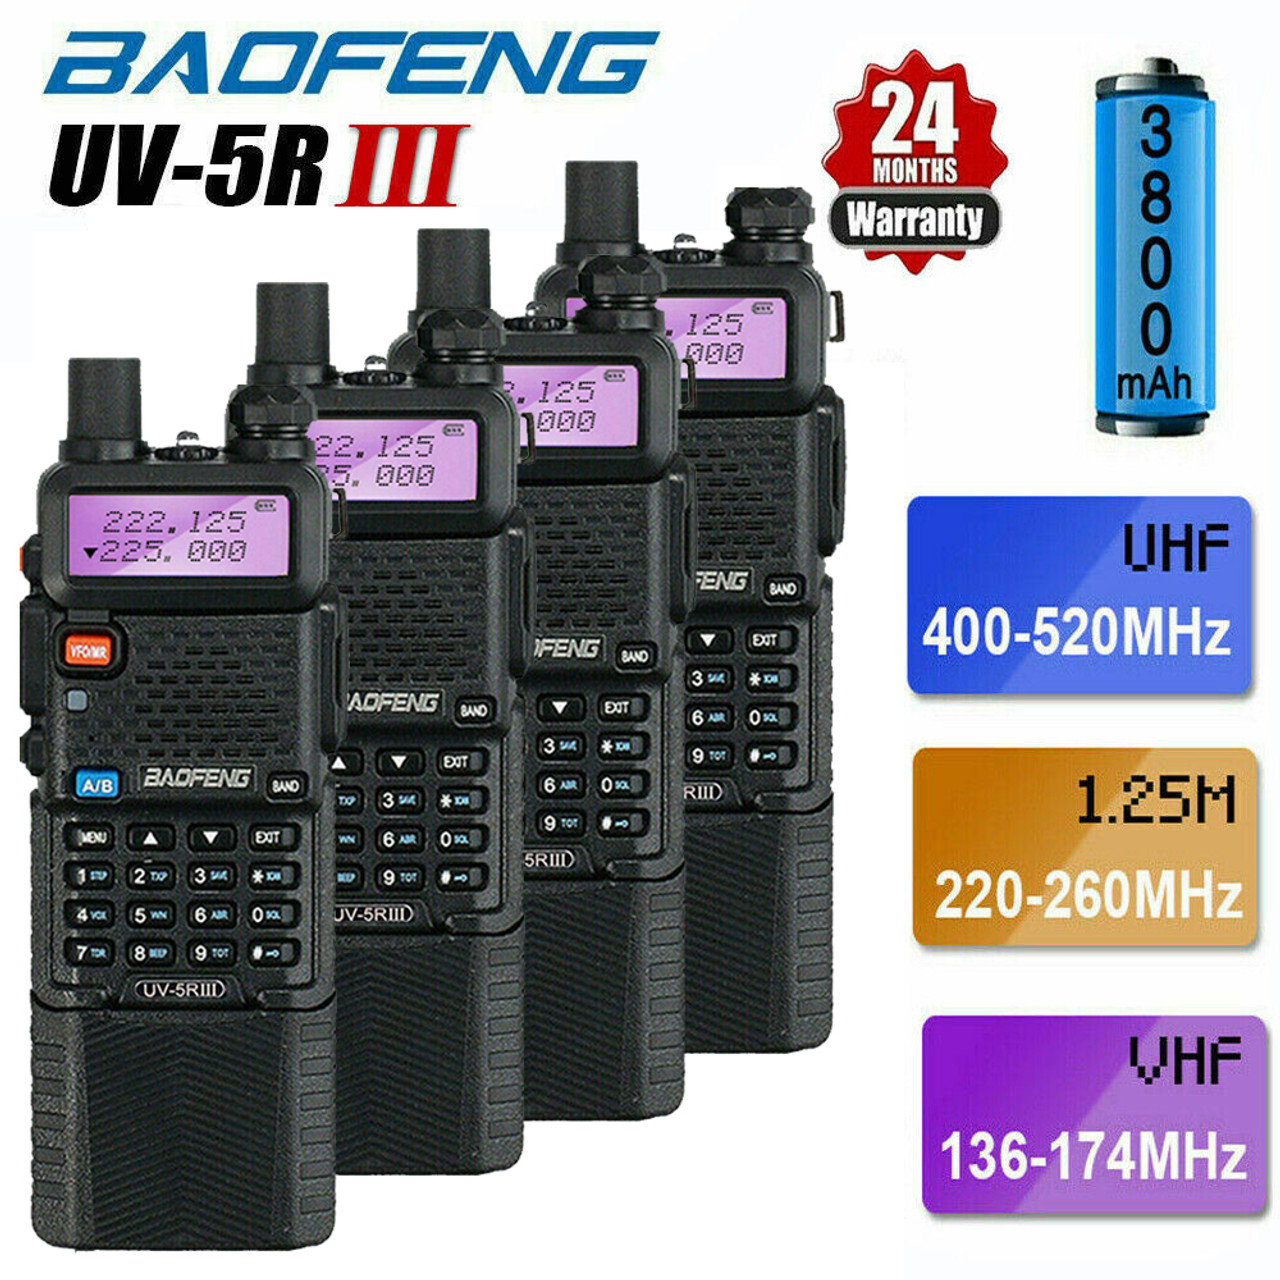 BaoFeng (UV-5R Pro) Ham Radio Handheld Walkie Talkies UHF VHF Dual Band 2-Way Radio Full Kit with an Extra 3800mAh Battery, Earpiece and Programming C - 3